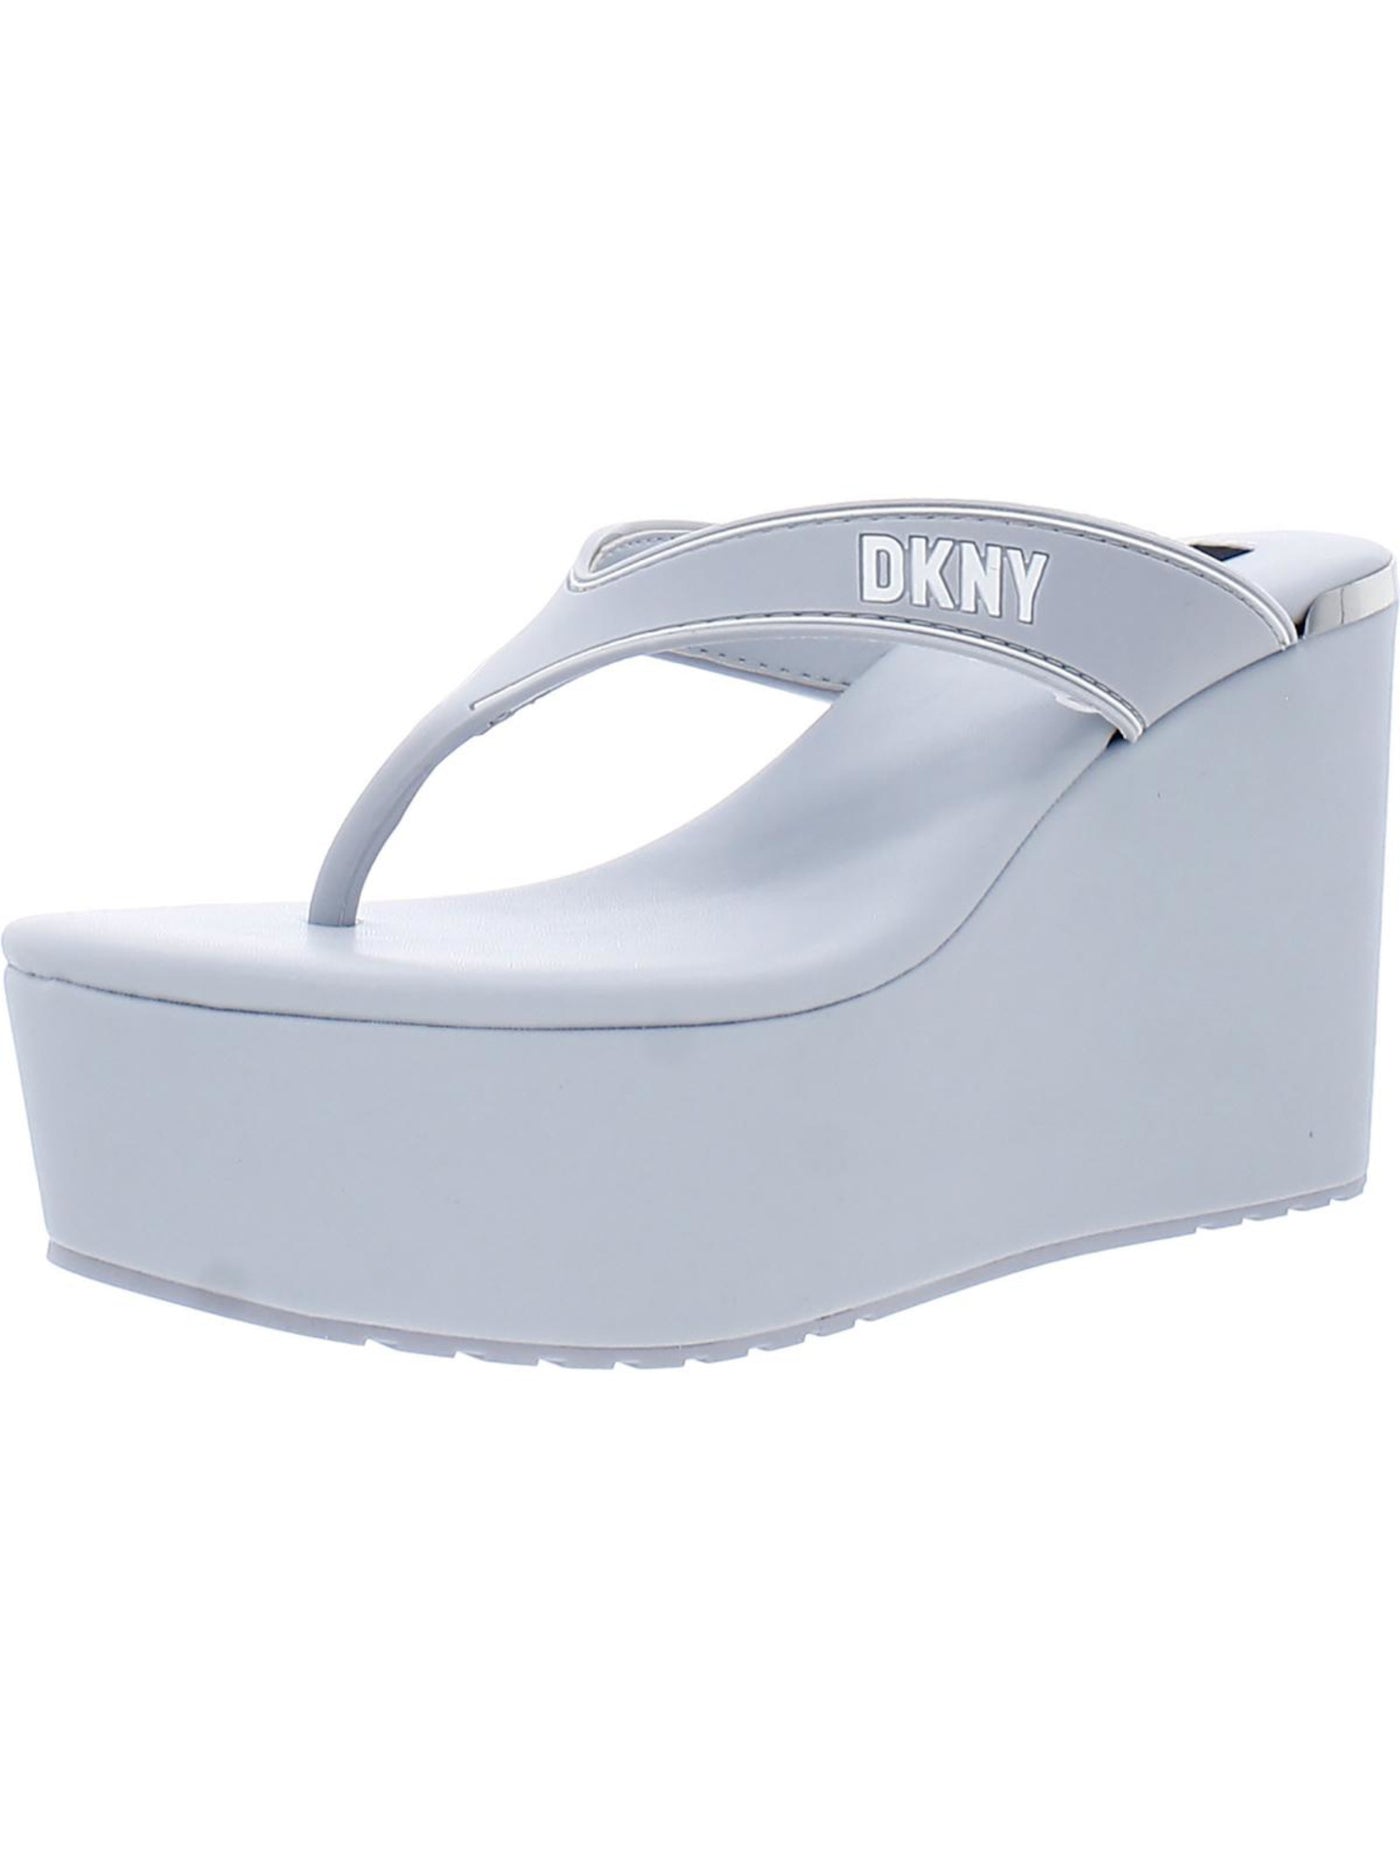 DKNY Womens Light Blue 2" Platform Comfort Logo Trina Round Toe Wedge Slip On Thong Sandals Shoes 9 M